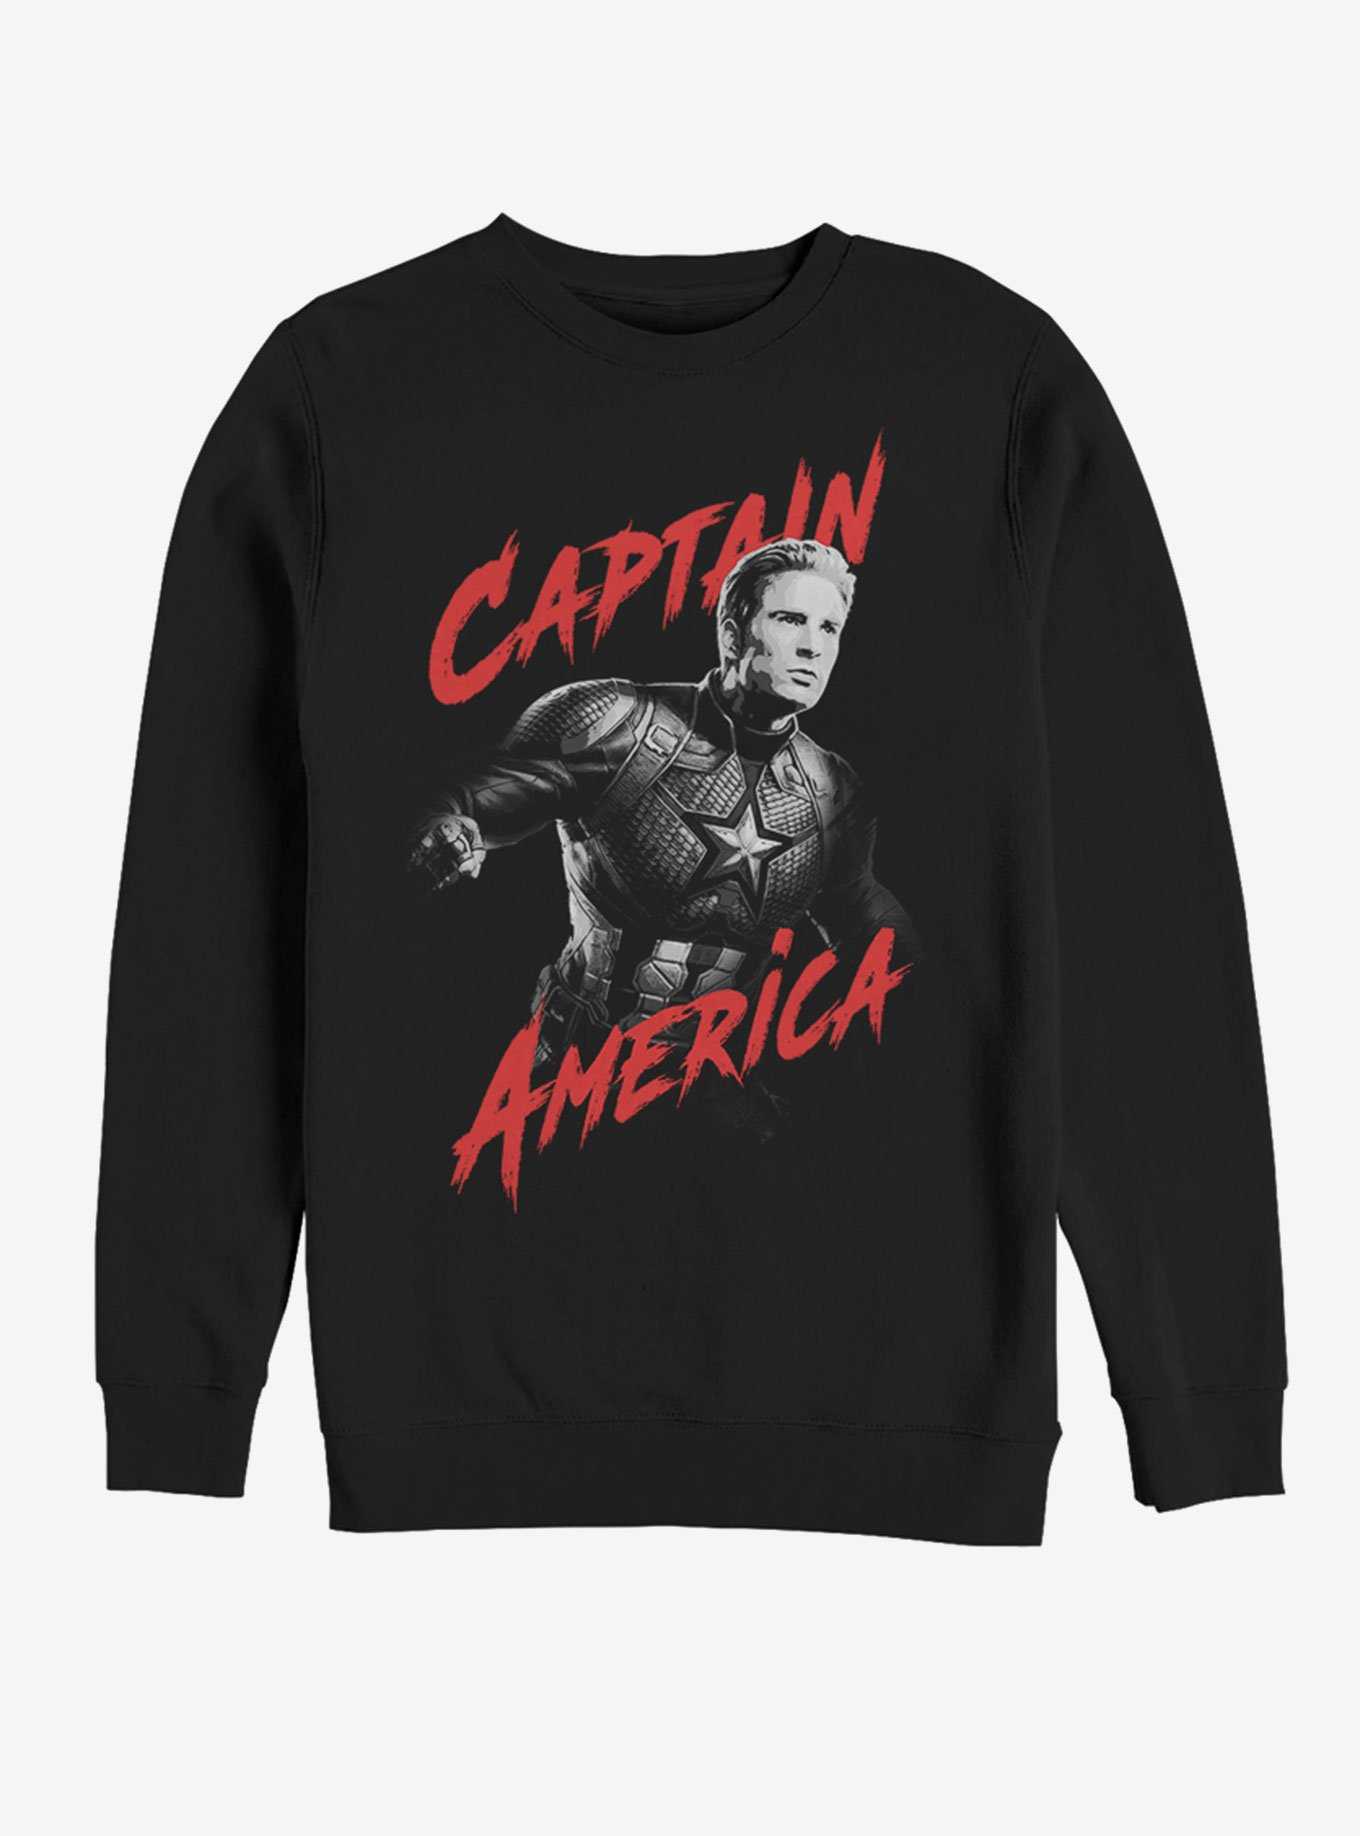 Marvel Avengers: Endgame High Contrast America Sweatshirt, , hi-res